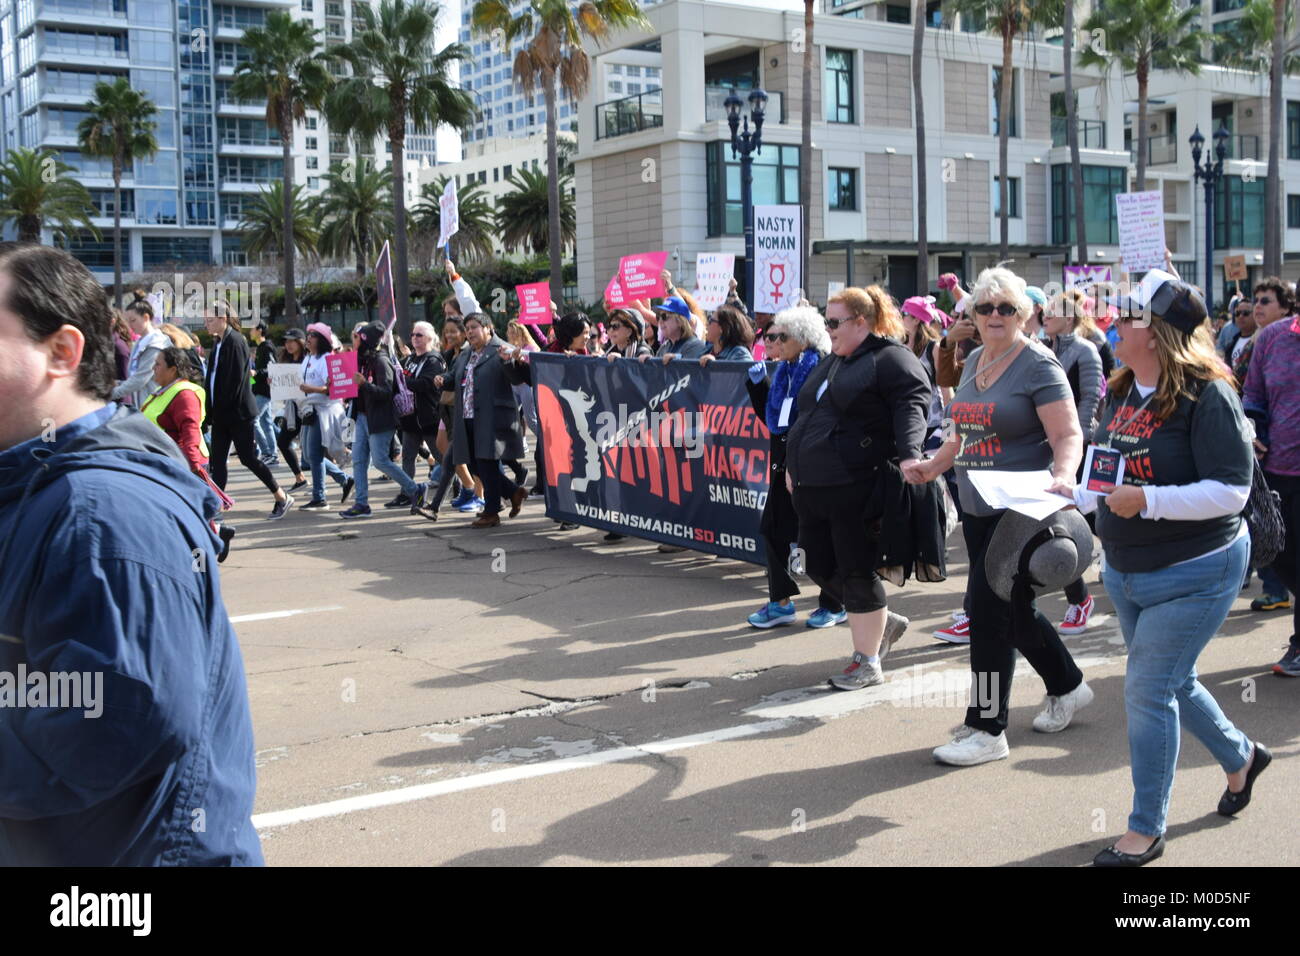 San Diego, USA. 19 Jan, 2018. Womens Mars 2018 San Diego Crédit : Matthieu Dycaico/Alamy Live News Banque D'Images